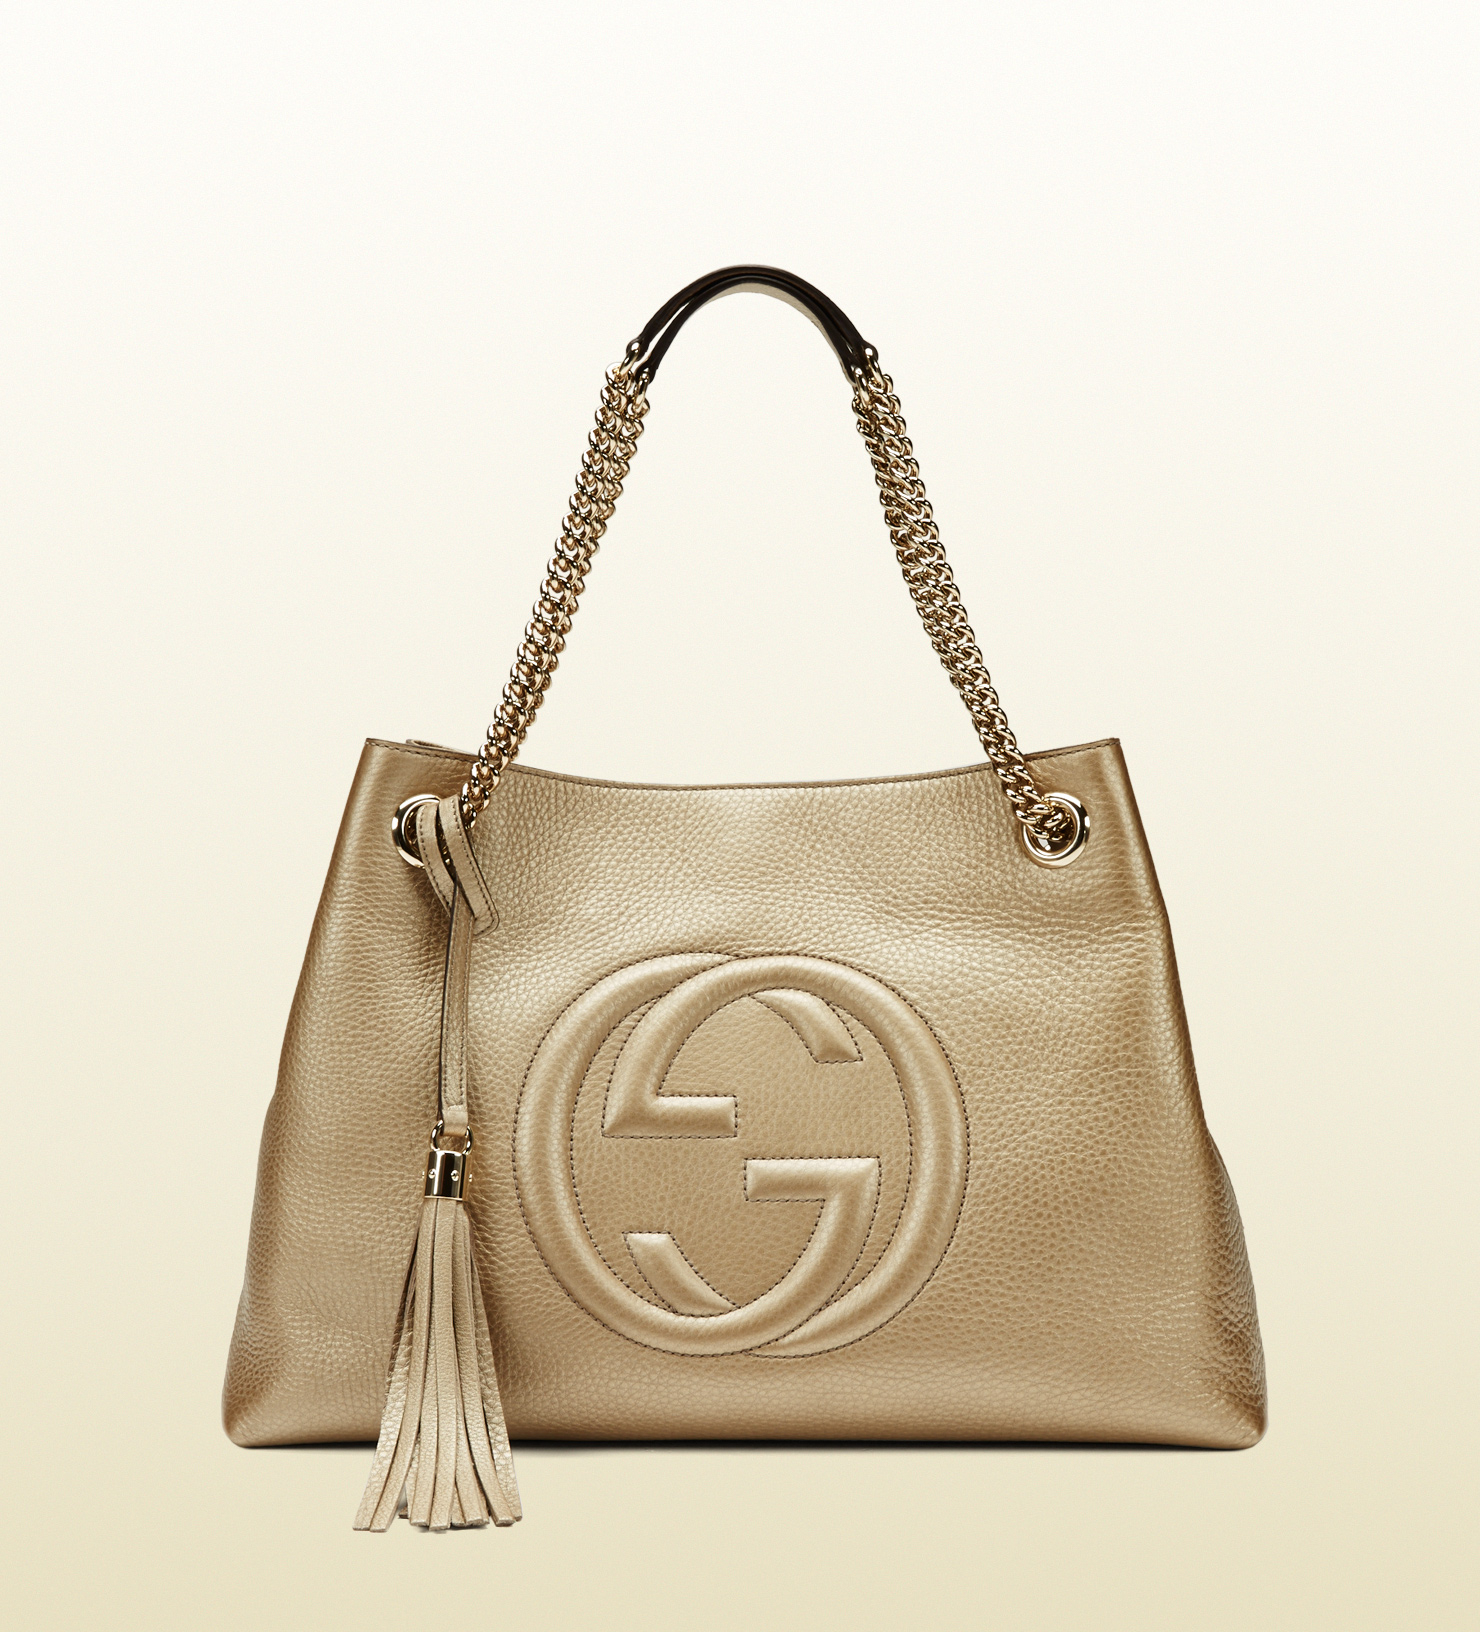 Lyst - Gucci Soho Metallic Leather Shoulder Bag in Natural